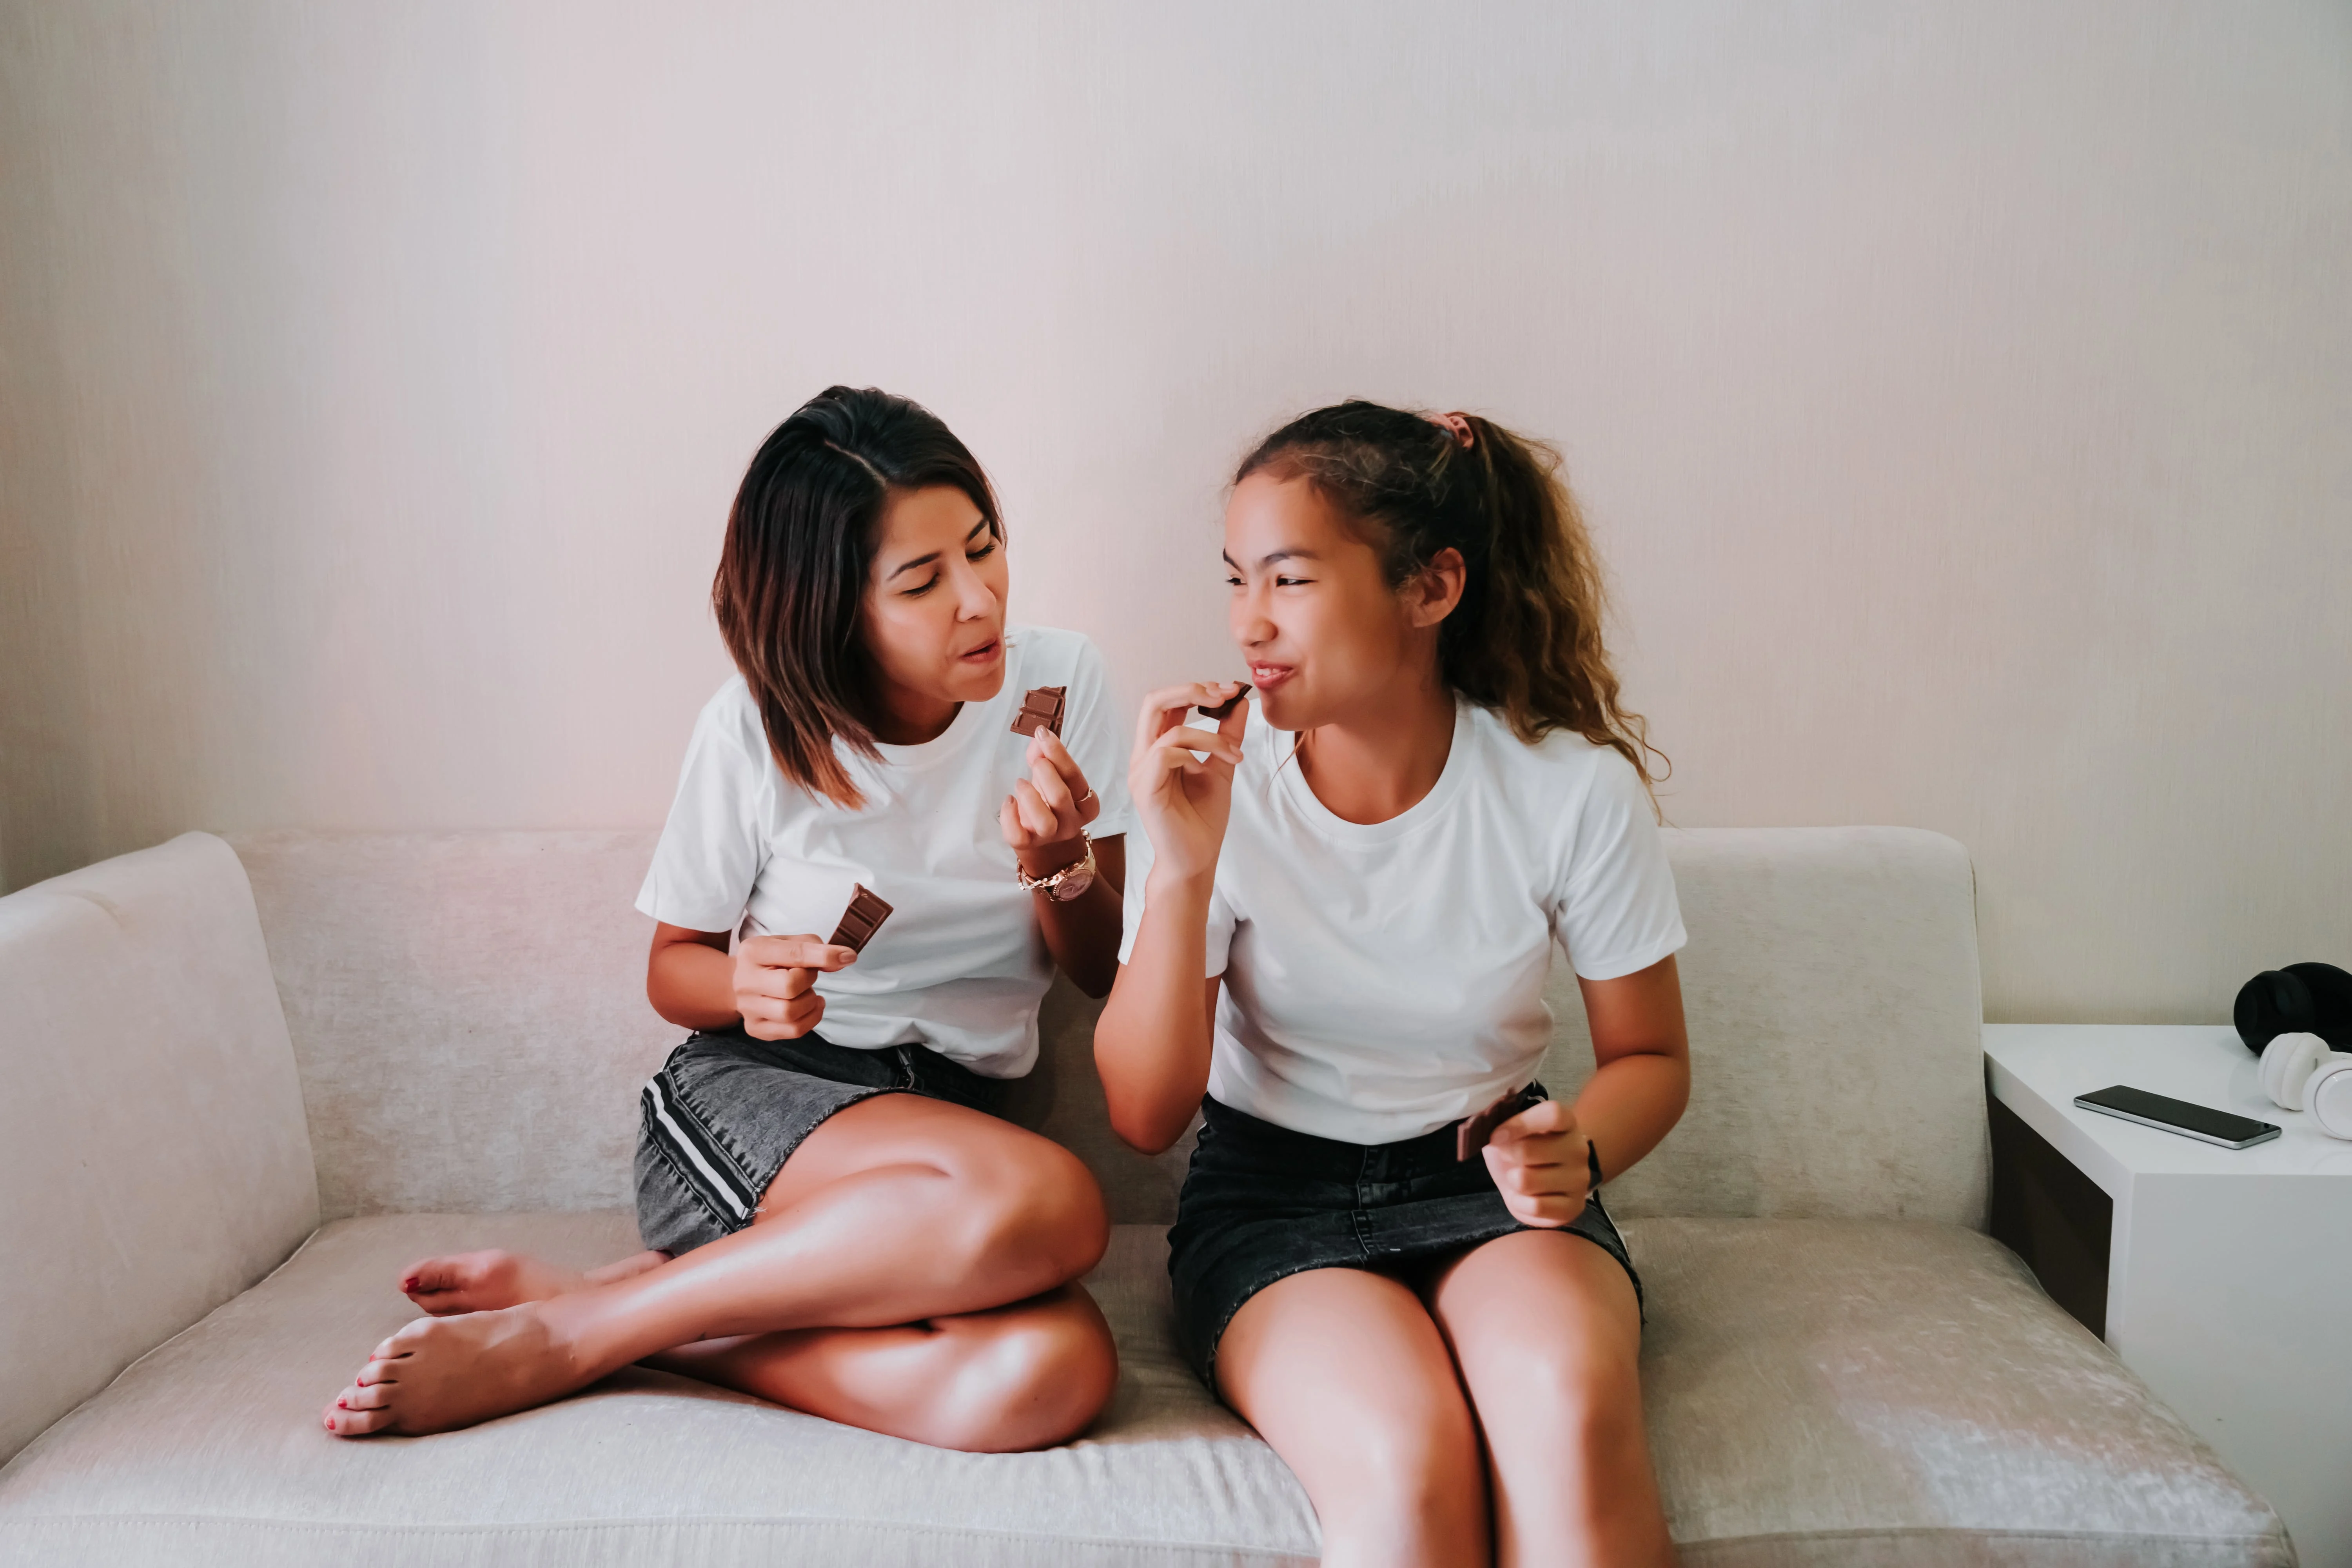 Two girls eating snacks